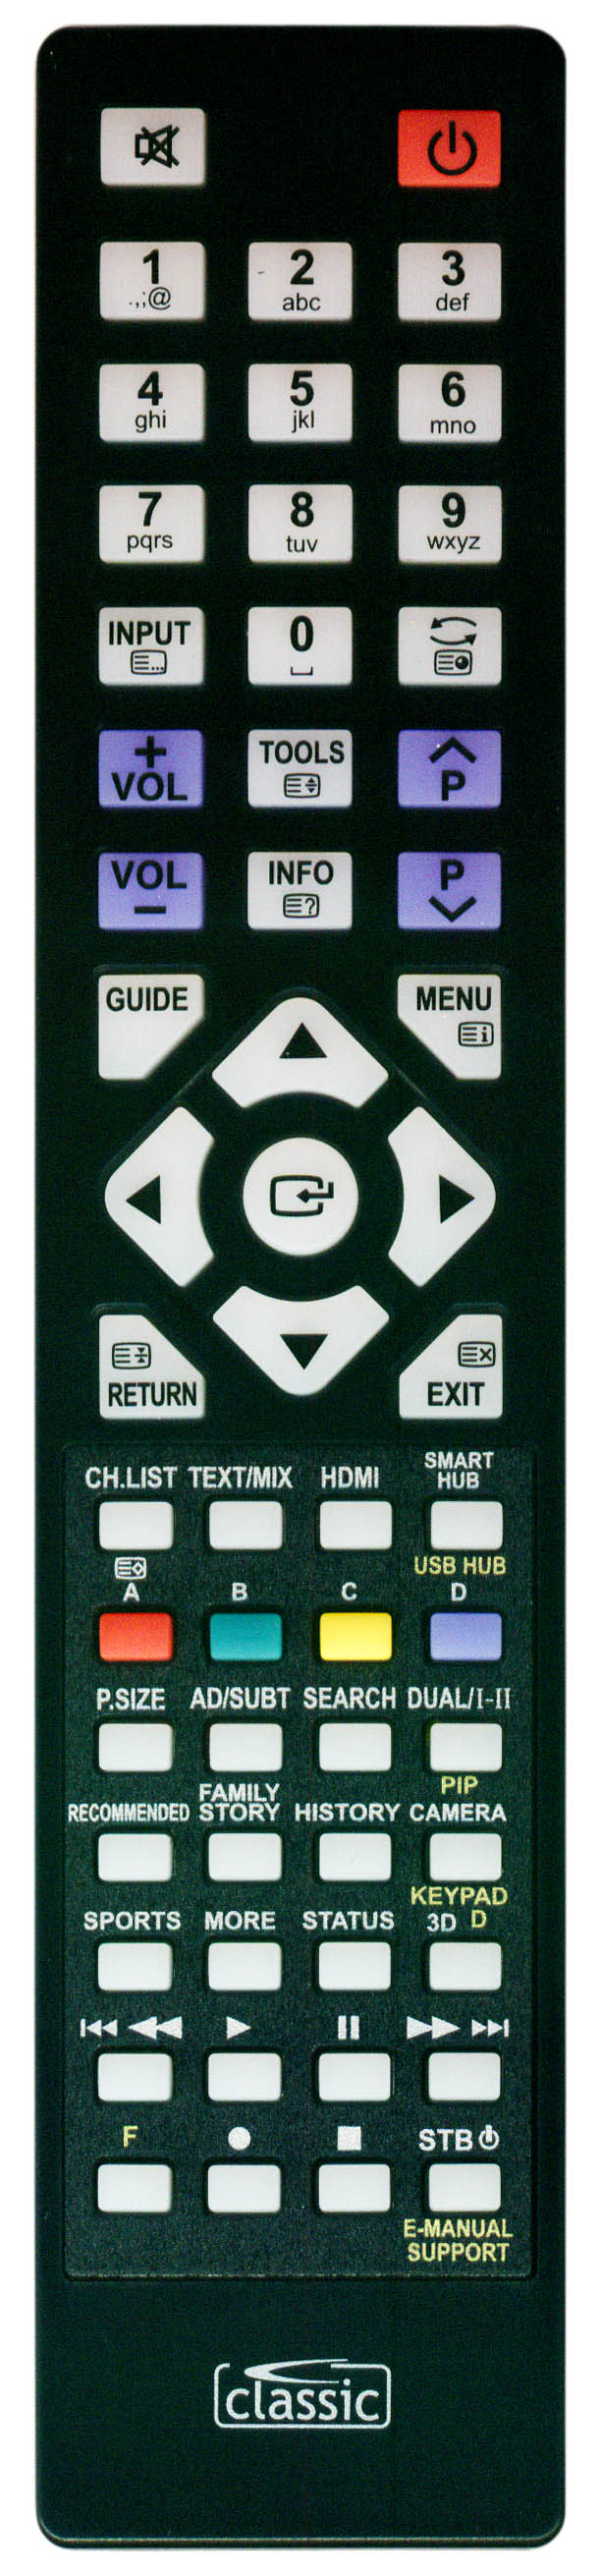 Samsung UE48J5200AUXRU Remote Control